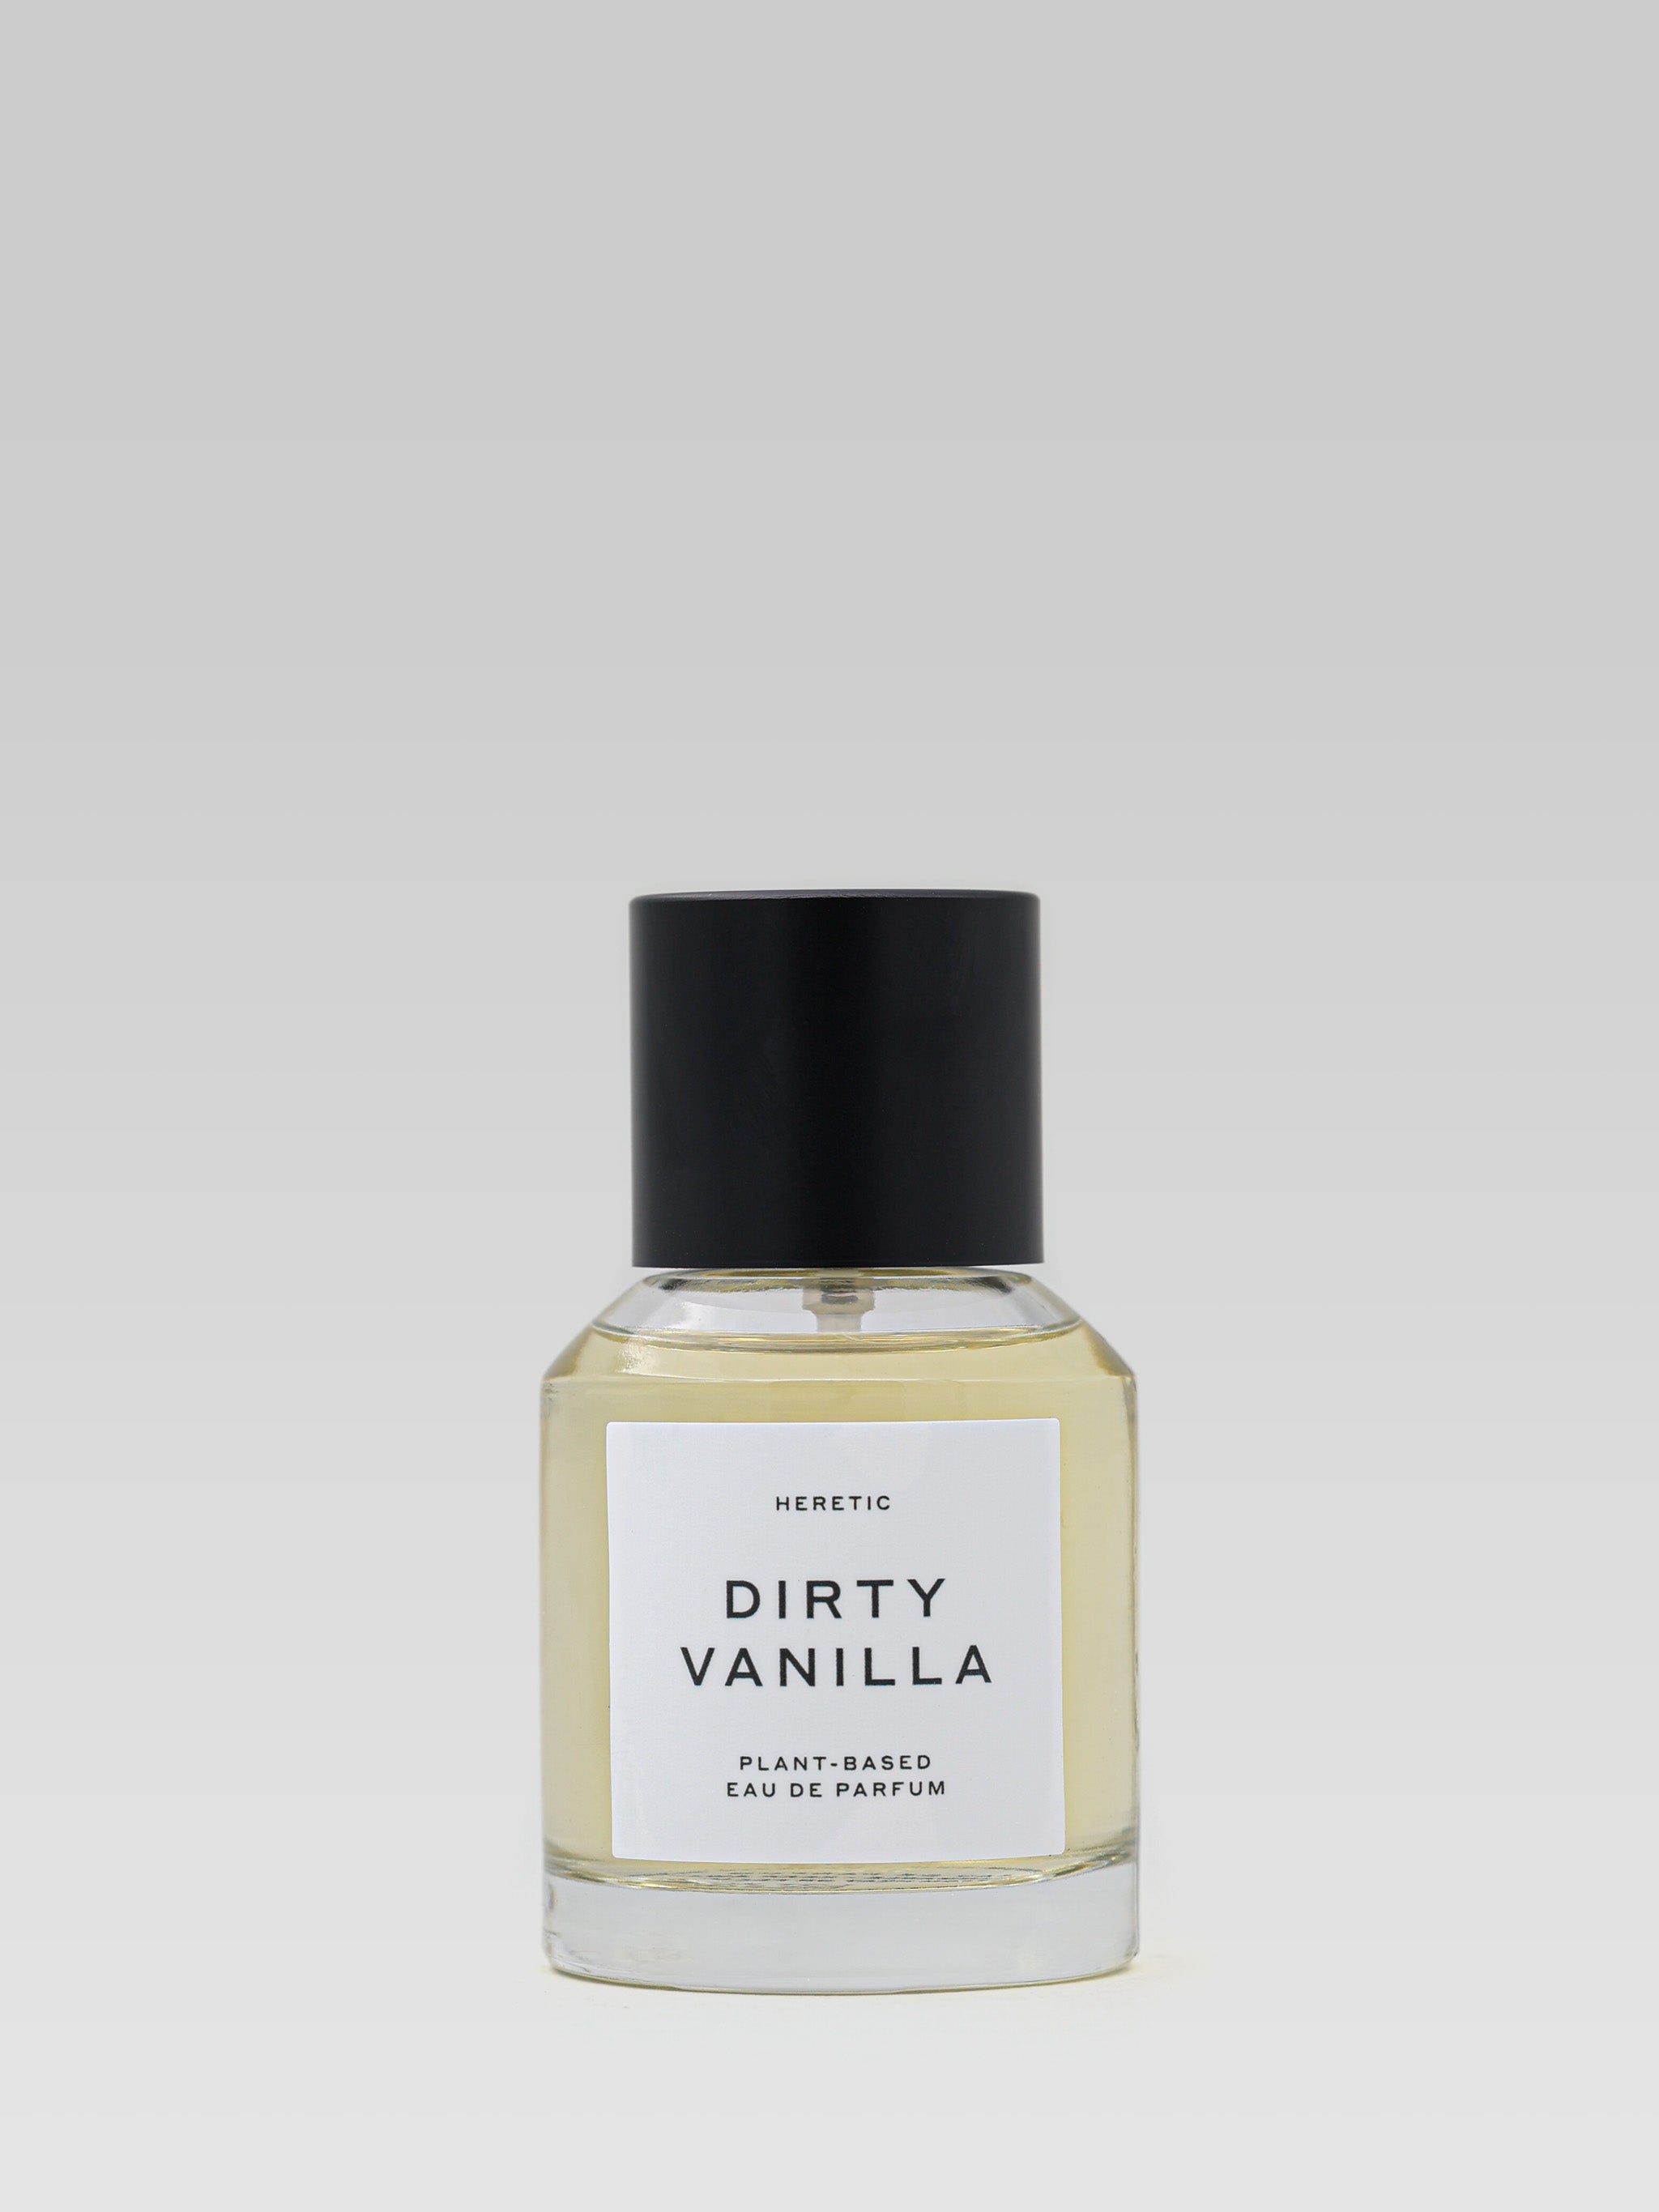 Heretic Parfum Dirty Vanilla product shot Original Size 